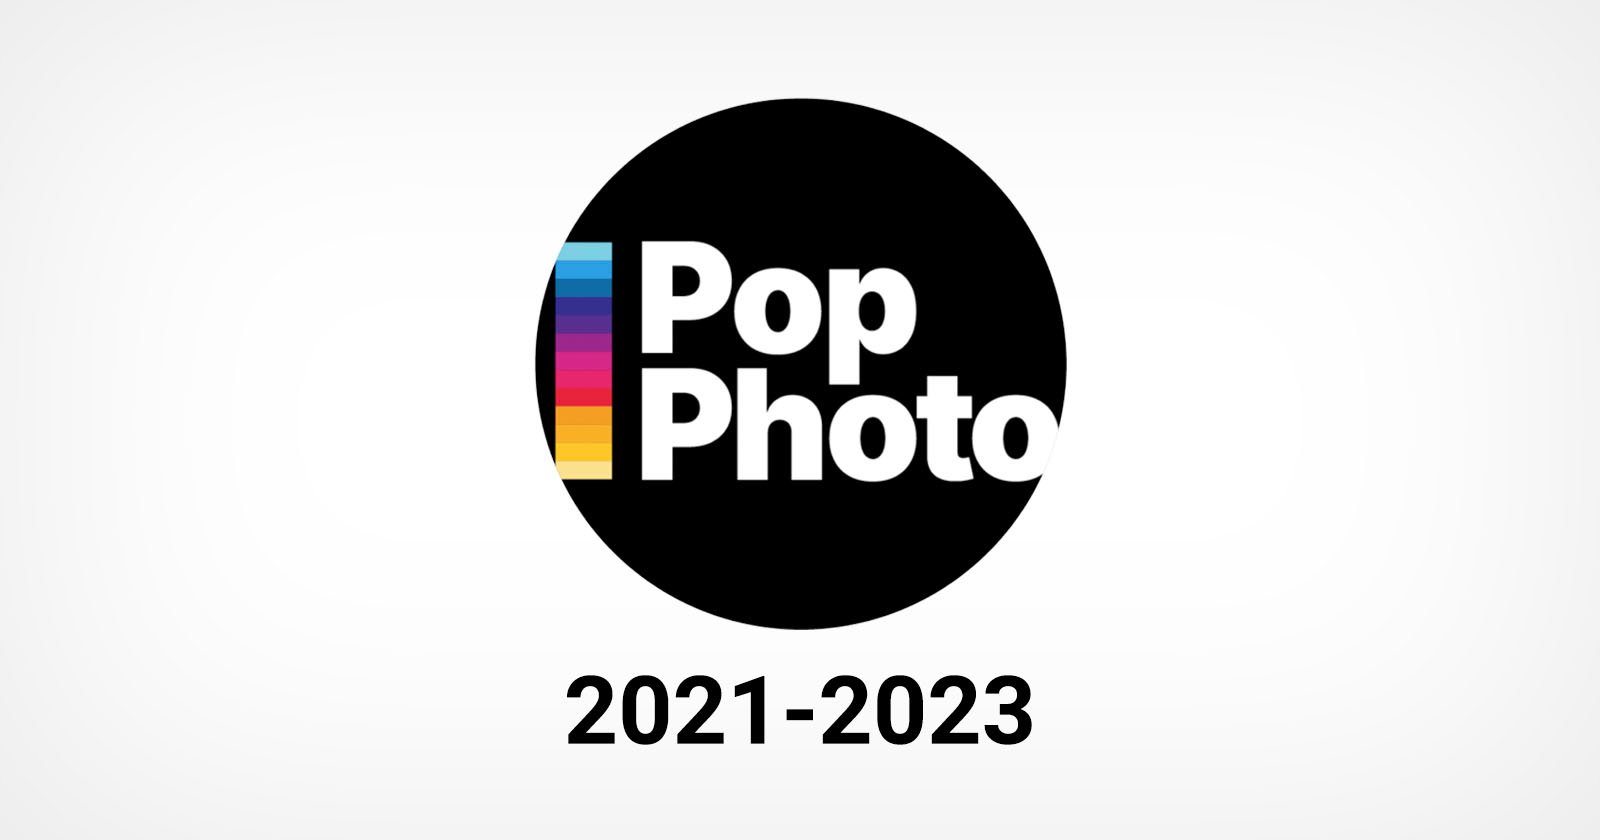 PopPhoto is Dead, Again